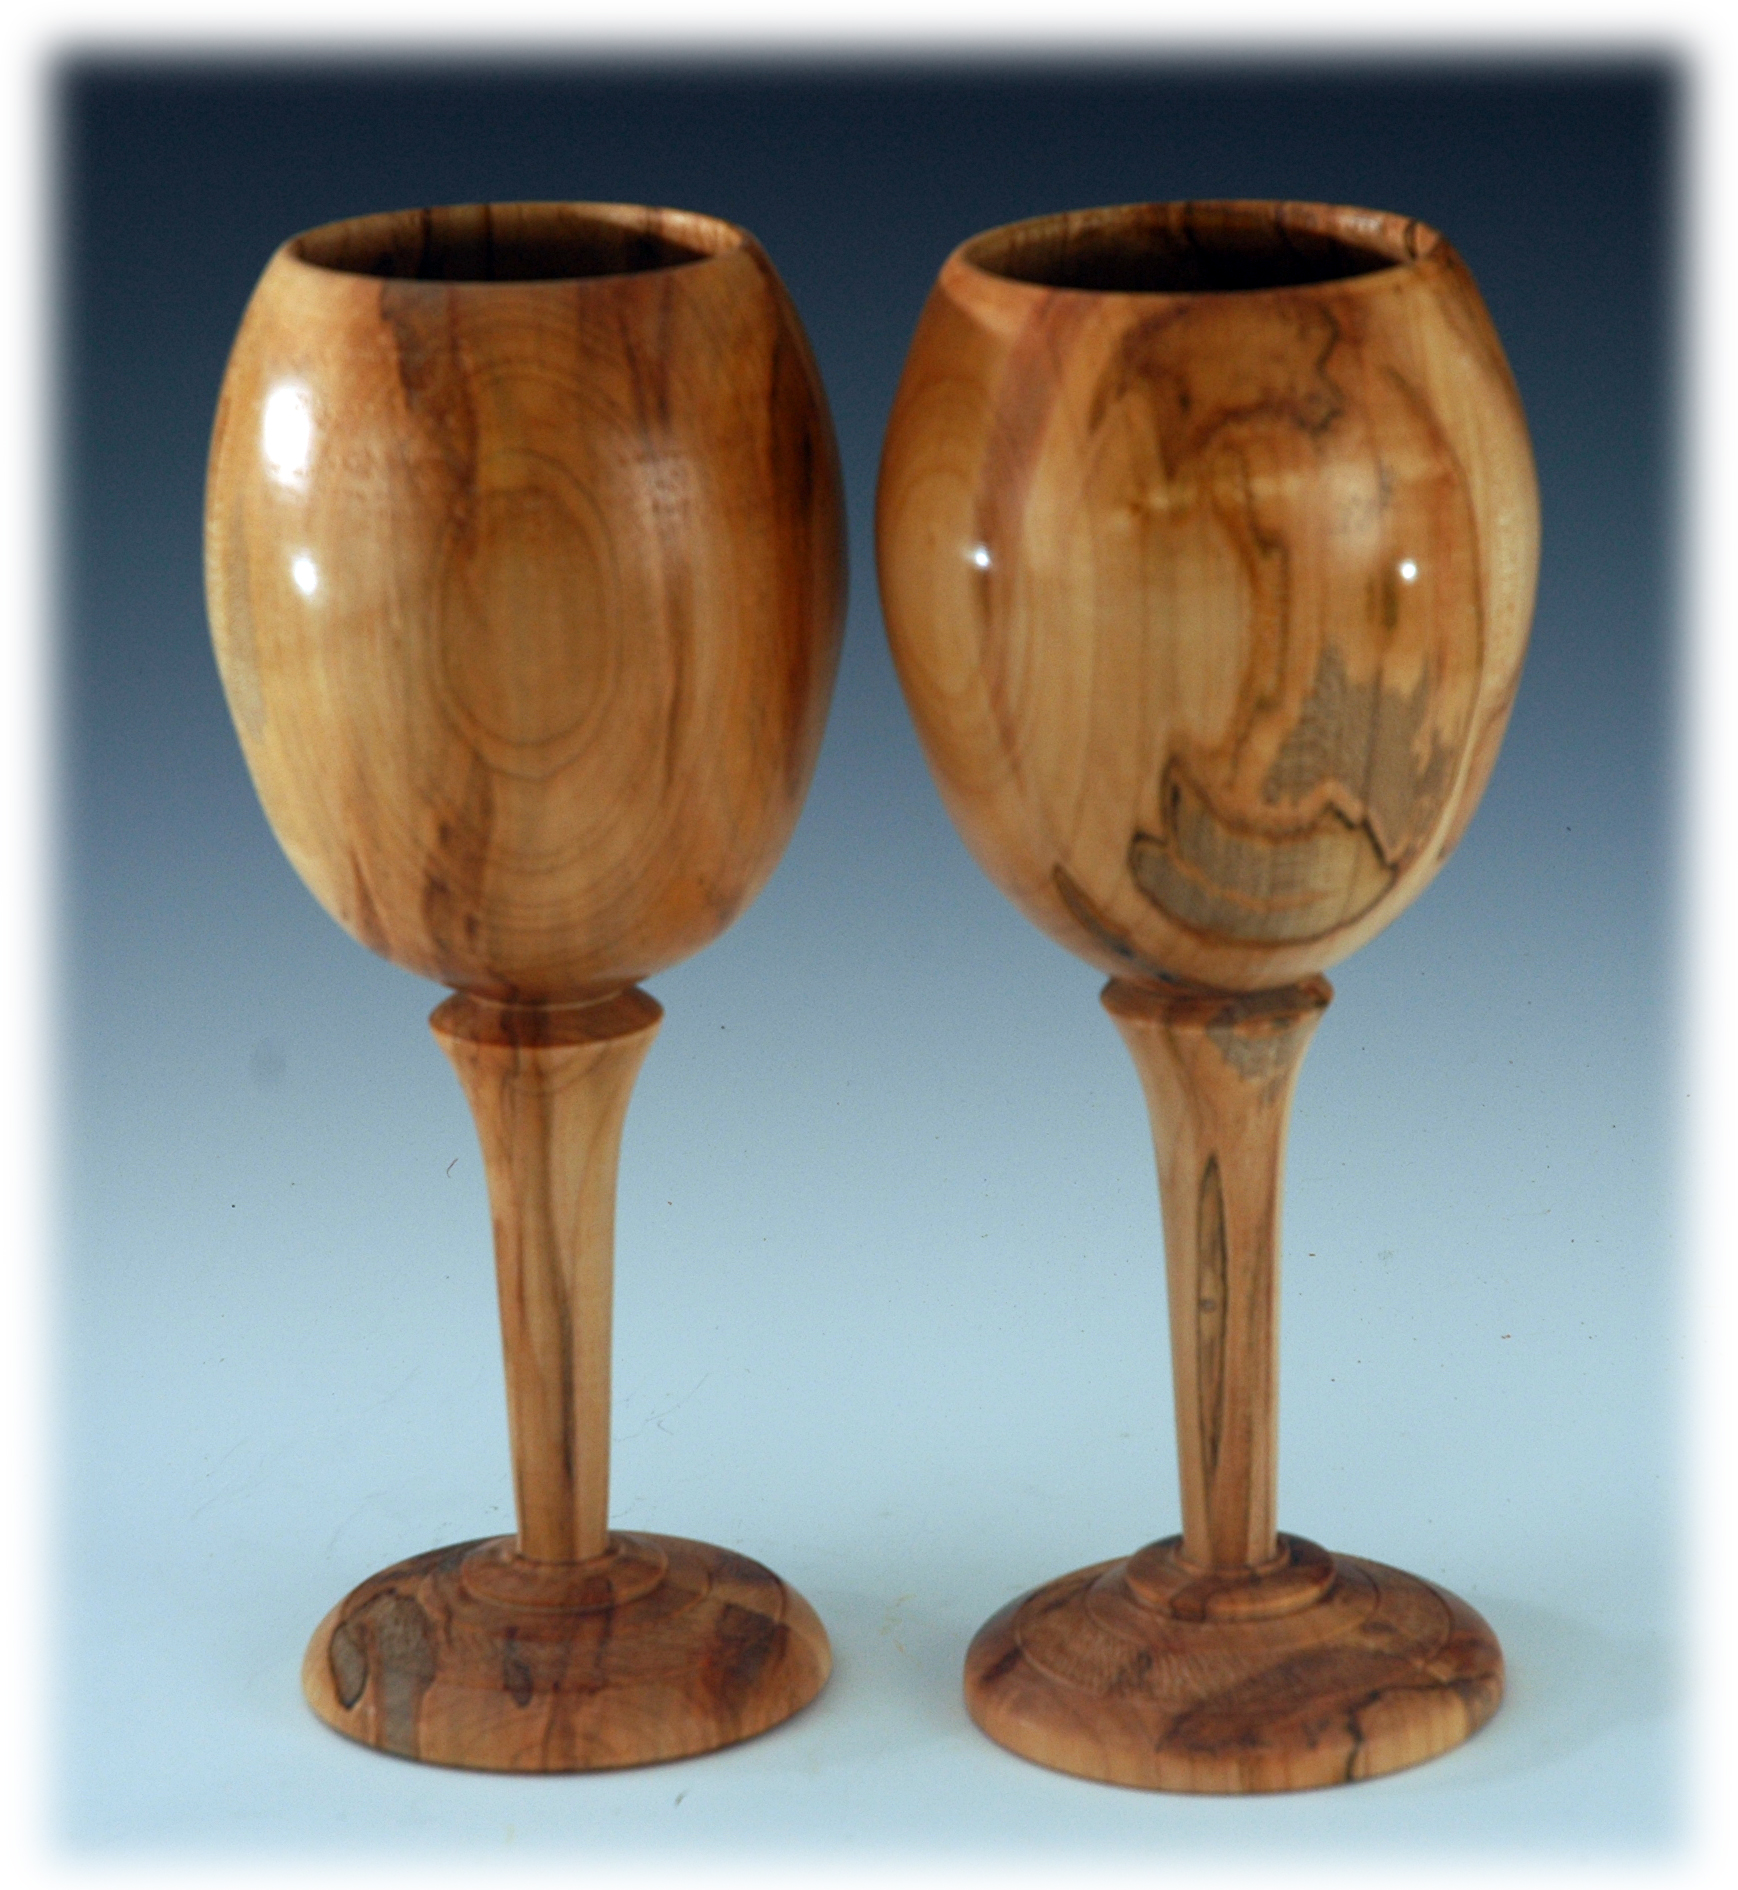 Wooden wine glasses